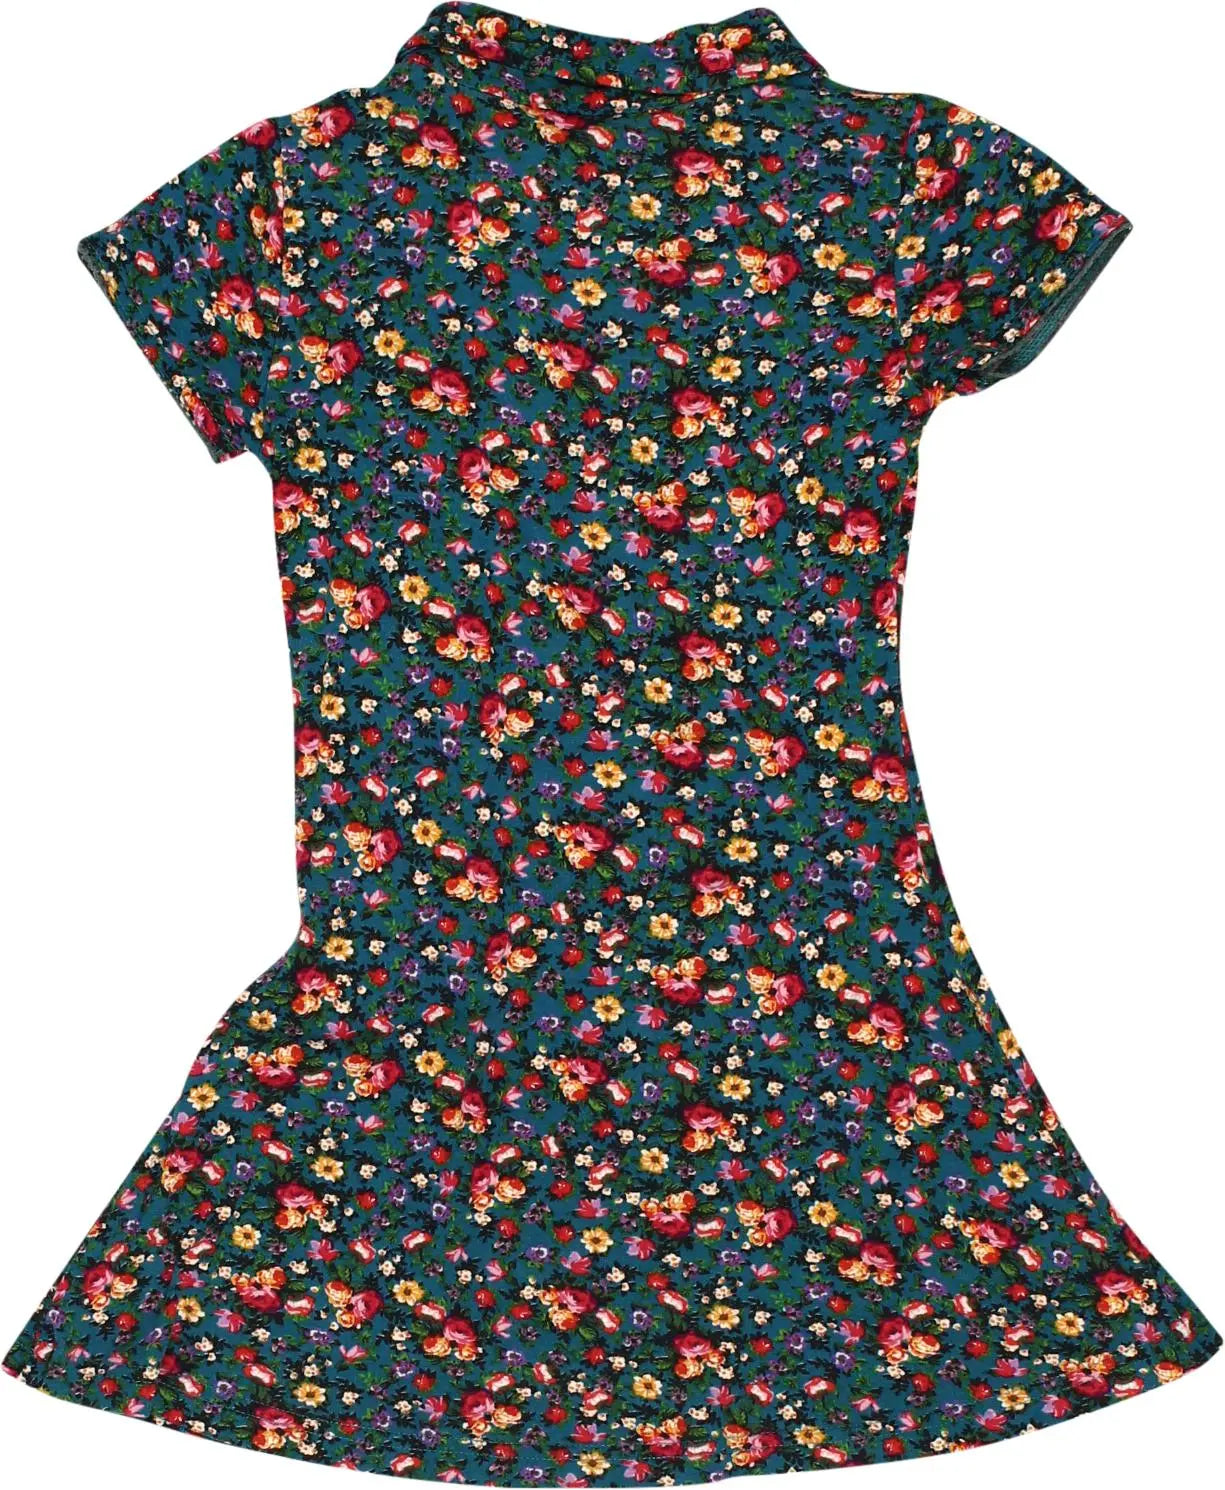 Frendz - Floral Dress- ThriftTale.com - Vintage and second handclothing